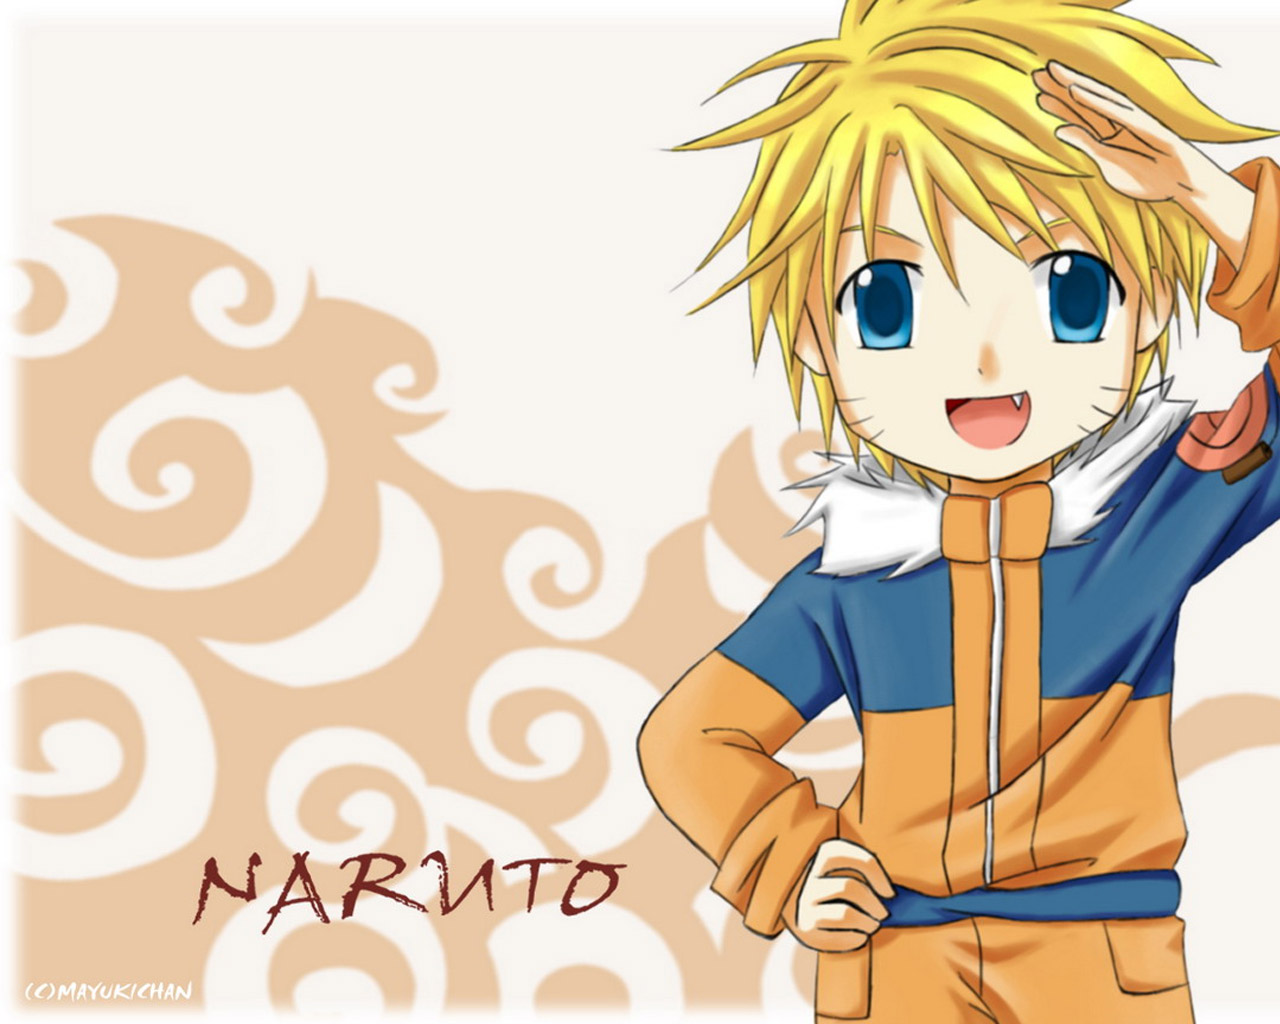 68+] Naruto Chibi Wallpaper - WallpaperSafari